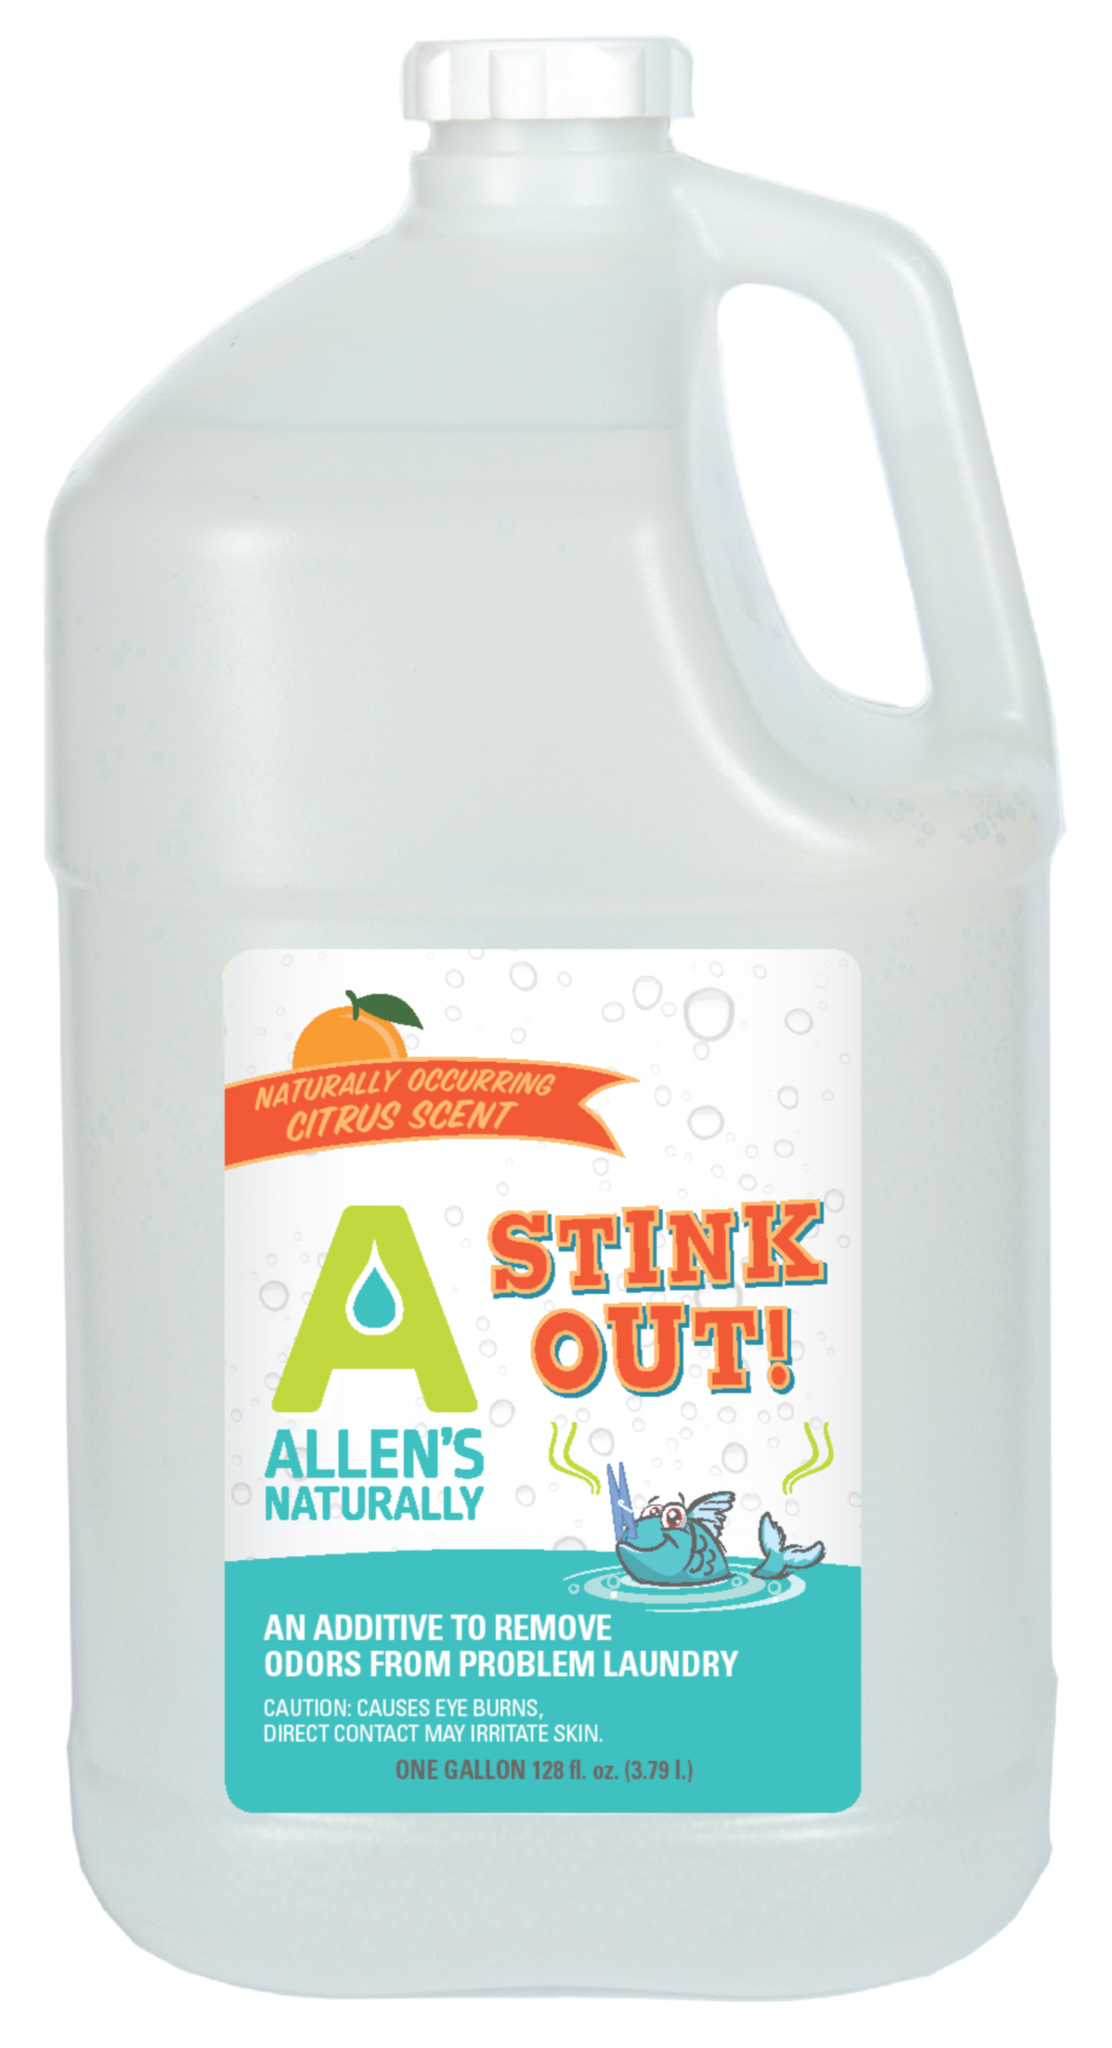 Allen's Stink Out